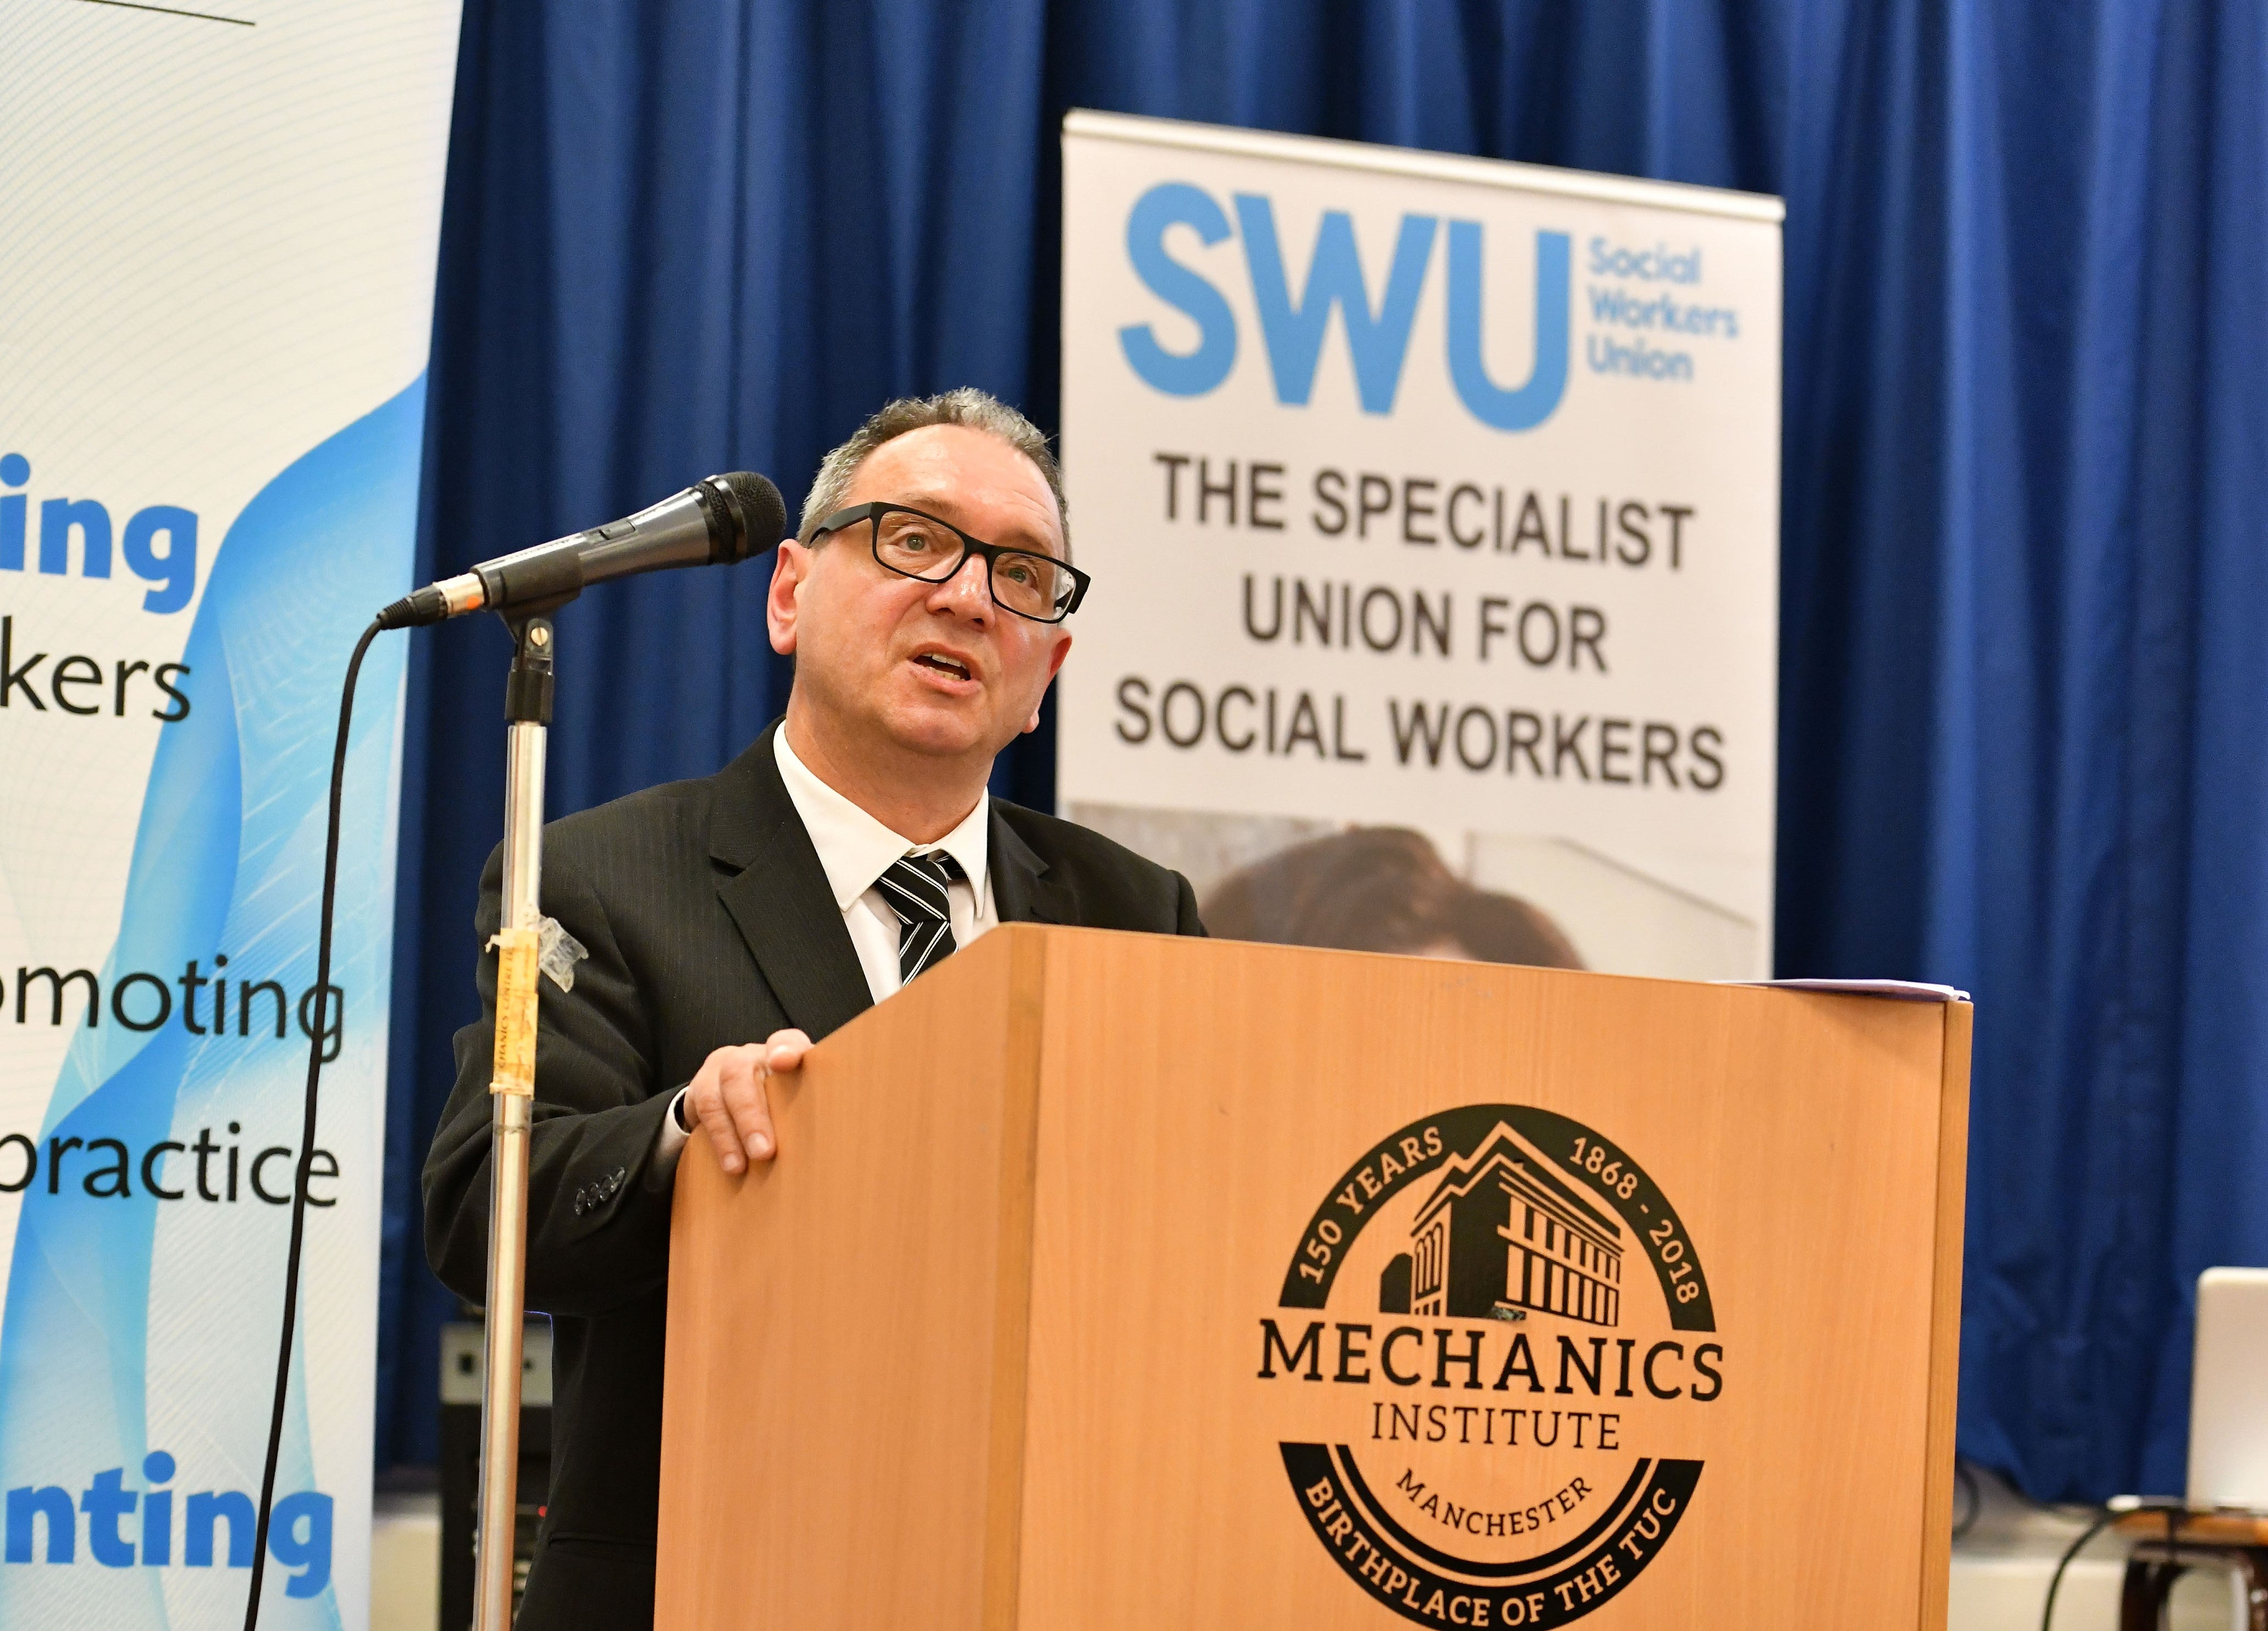 John McGowan, General Secretary of the Social Workers Union